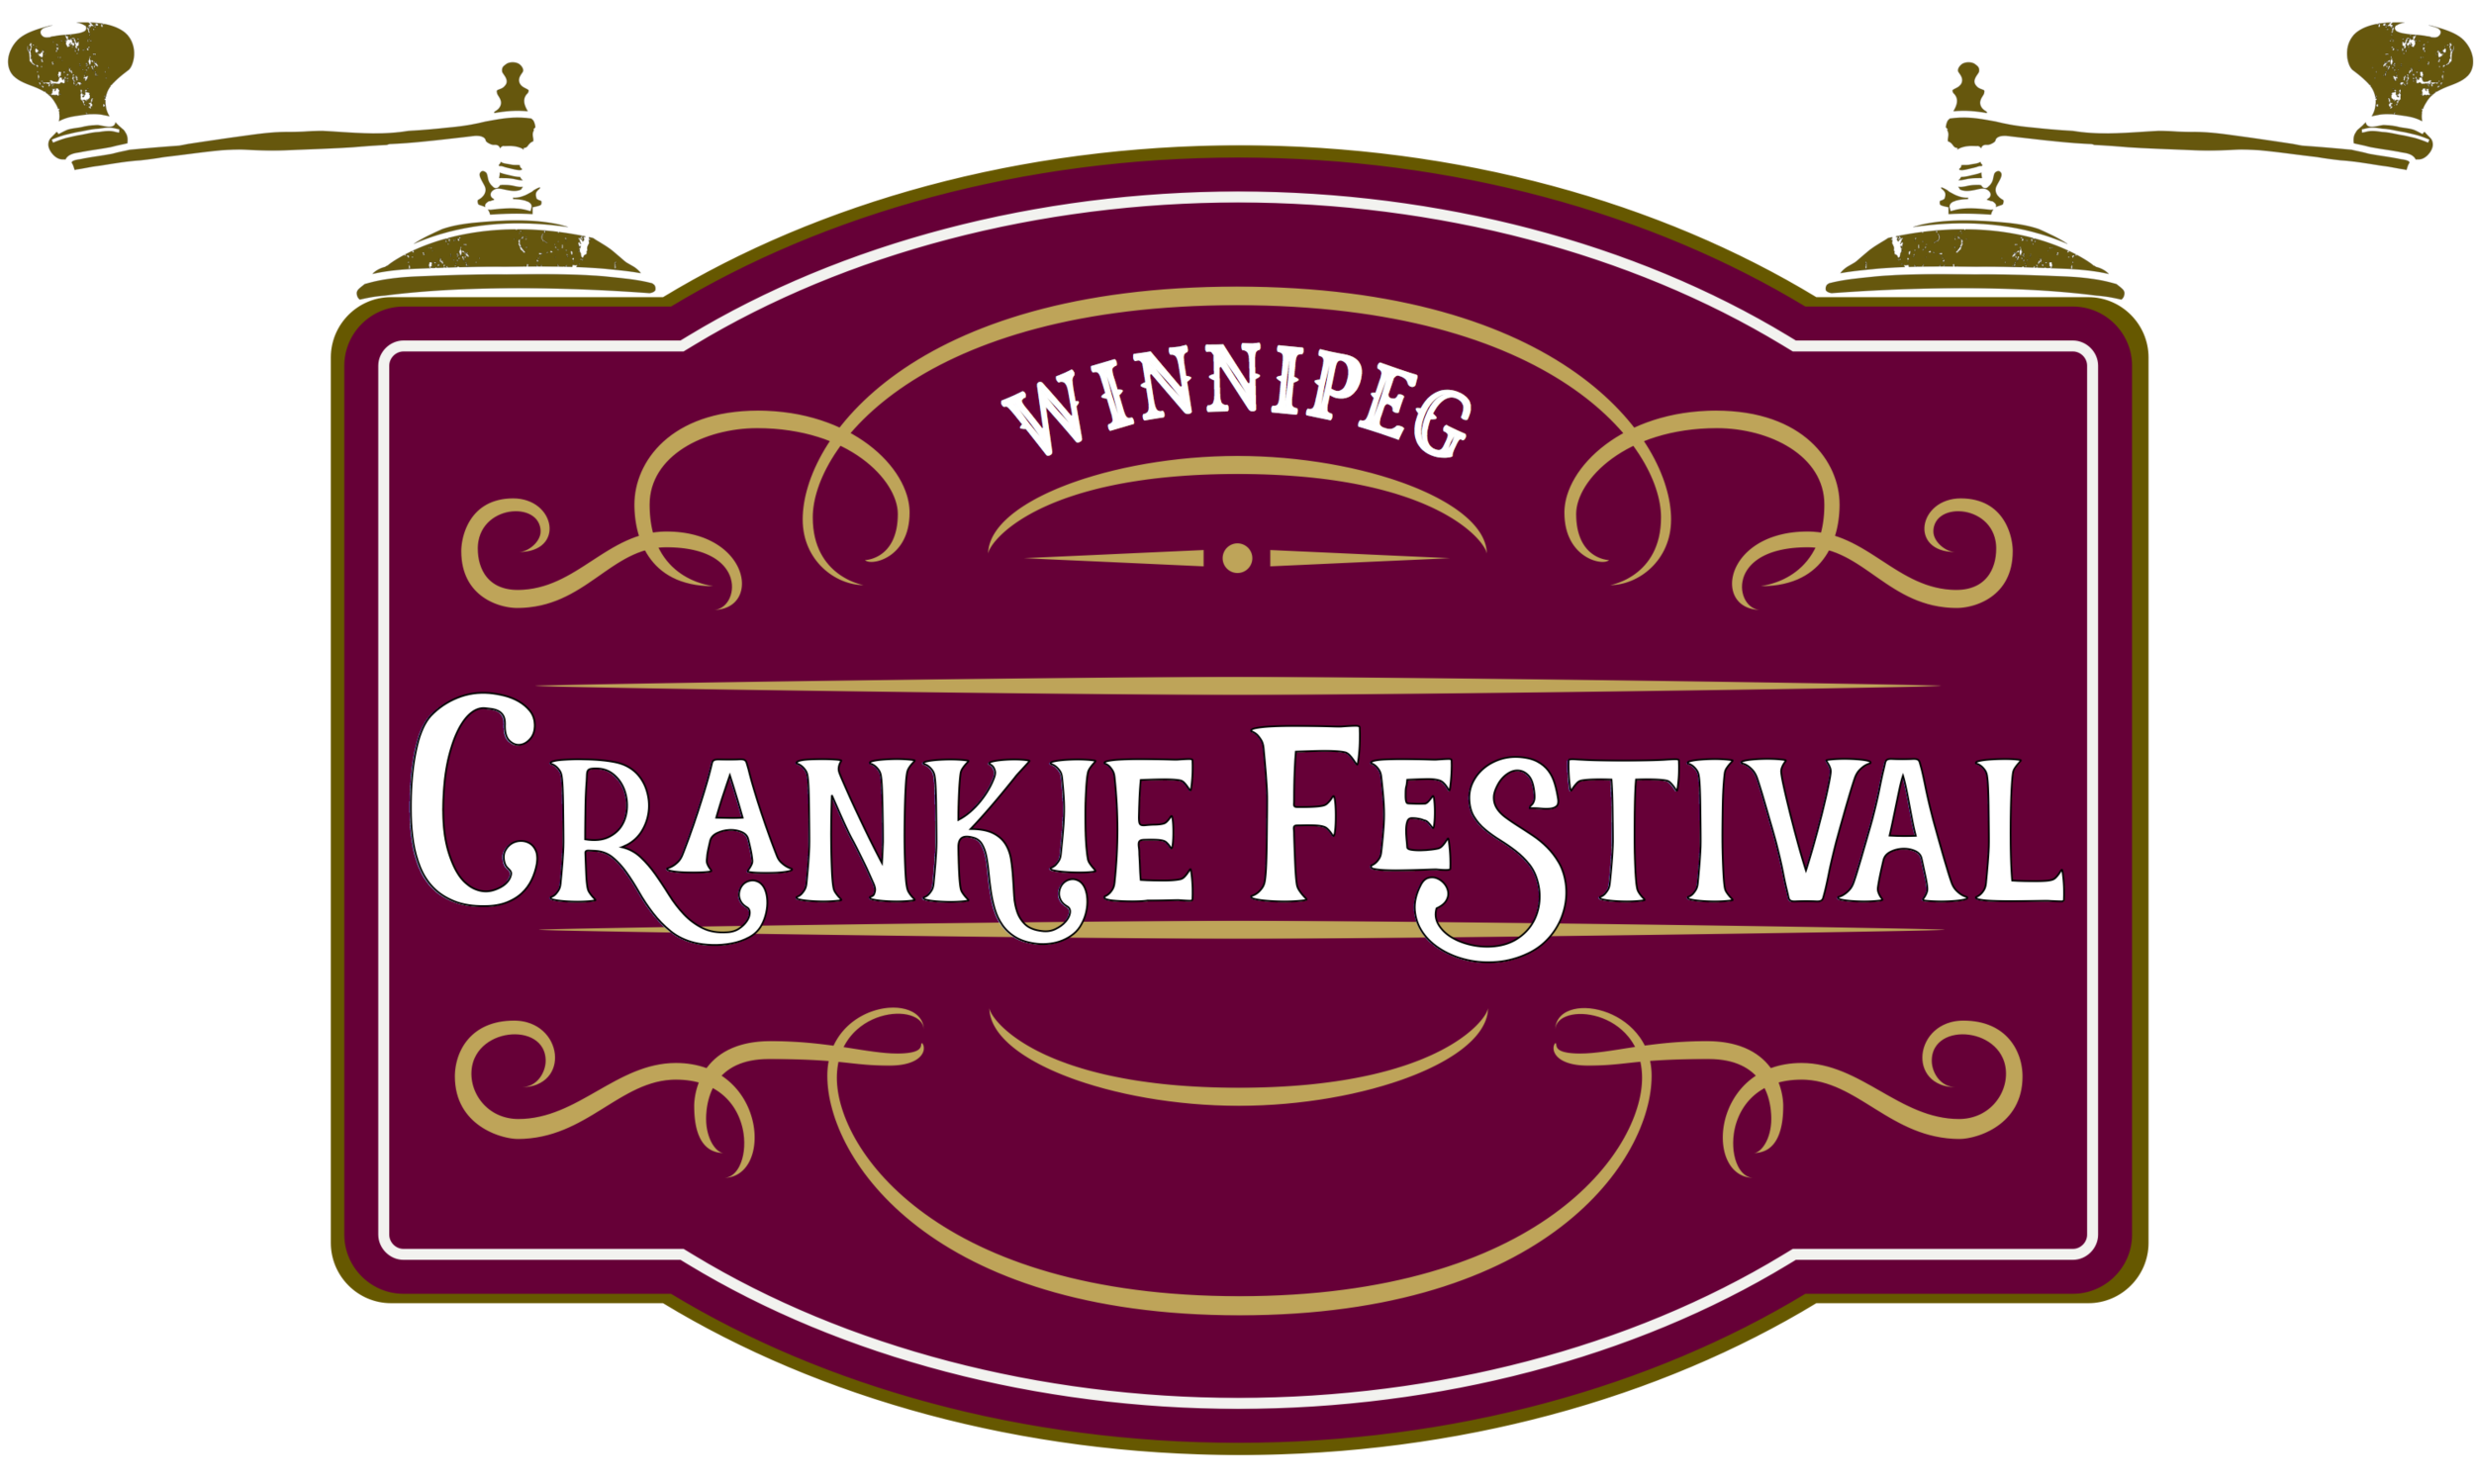 The Winnipeg Crankie Festival